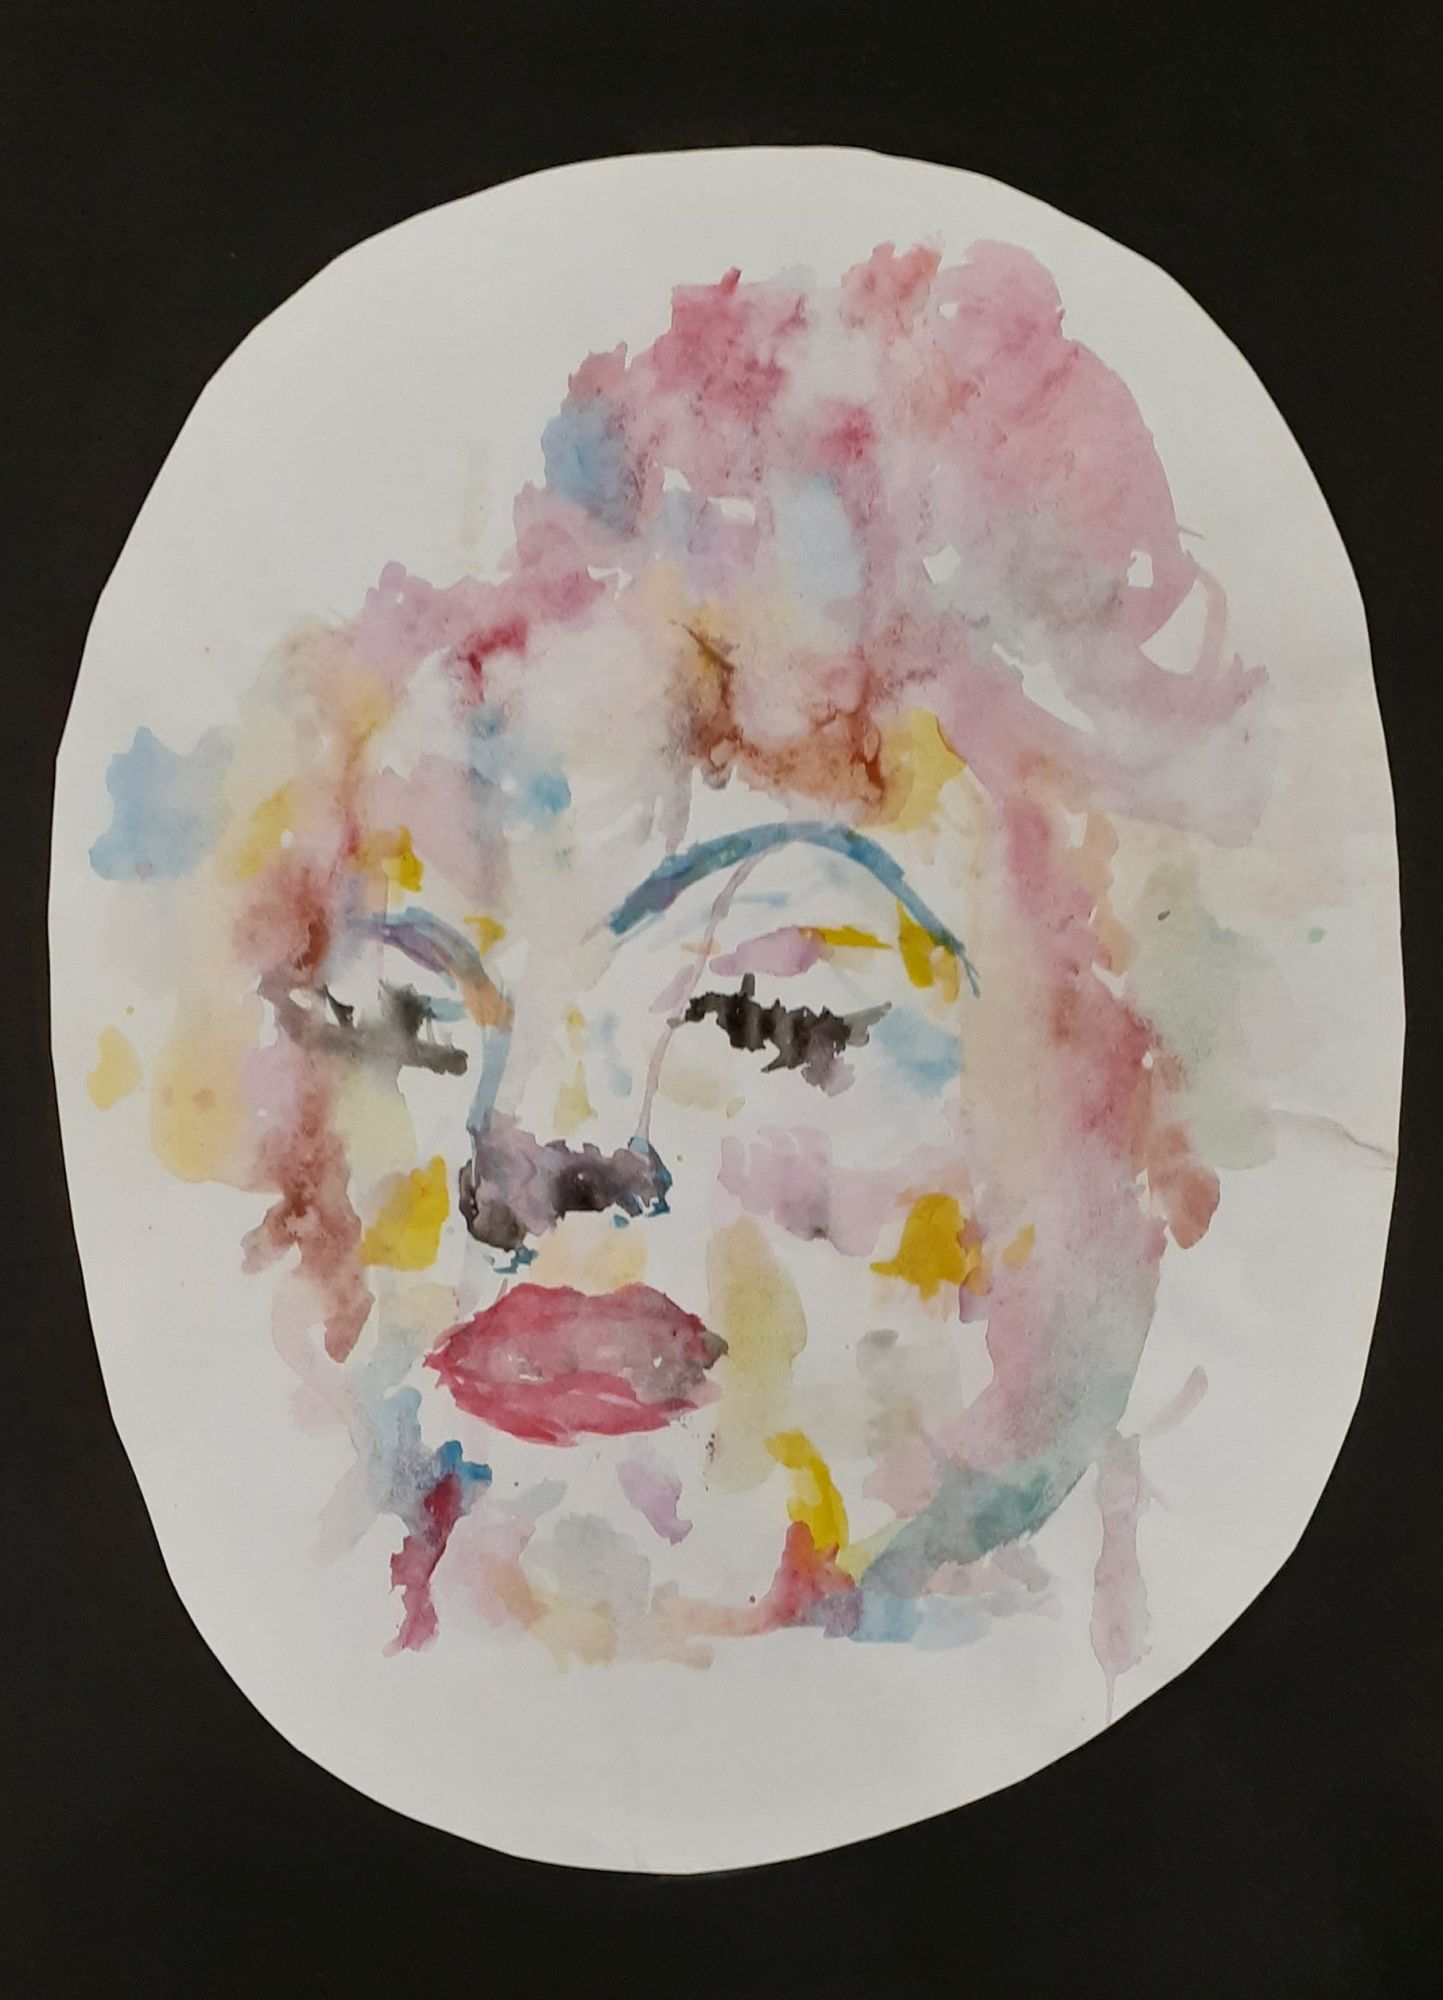 Student artwork - Marilyn Monroe